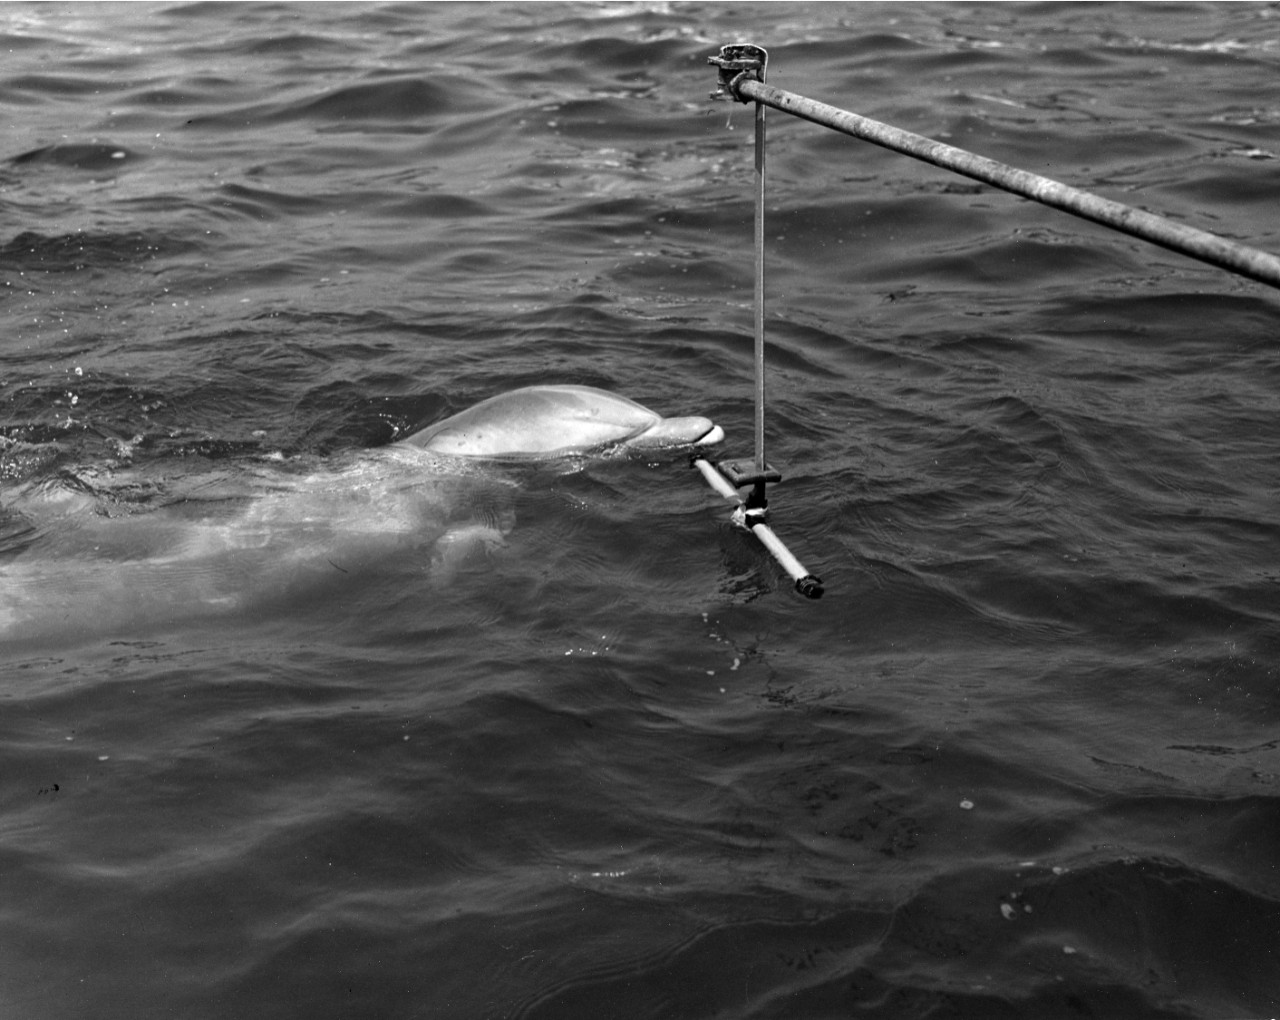 Point Mugu porpoise "Dash" inspecting shower. August 20, 1963. 